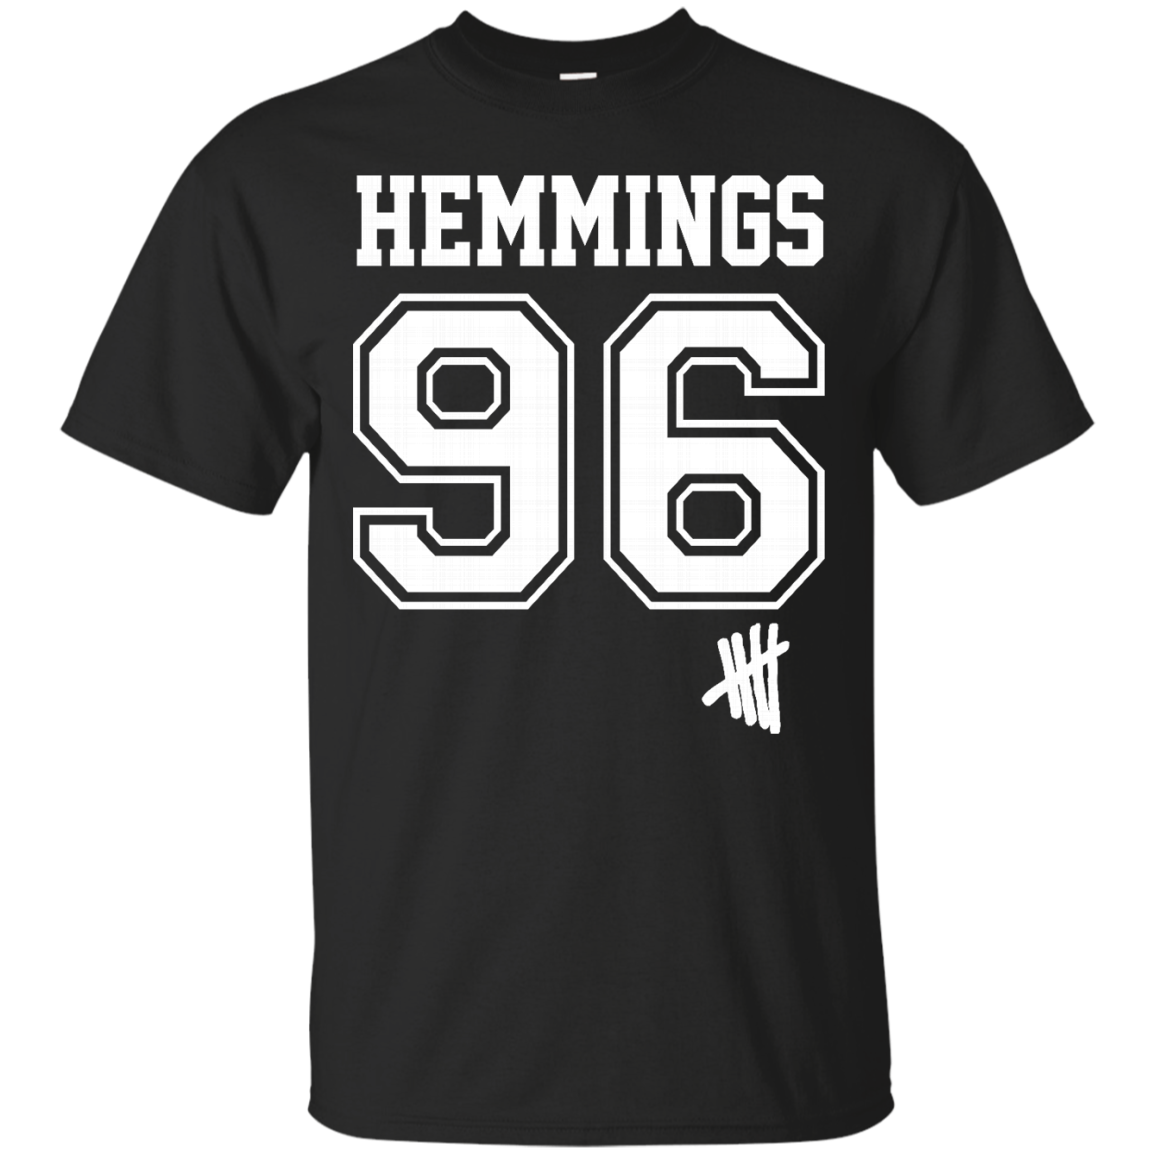 Luke Hemmings Shirts Hemmings 96 - Baby Kools